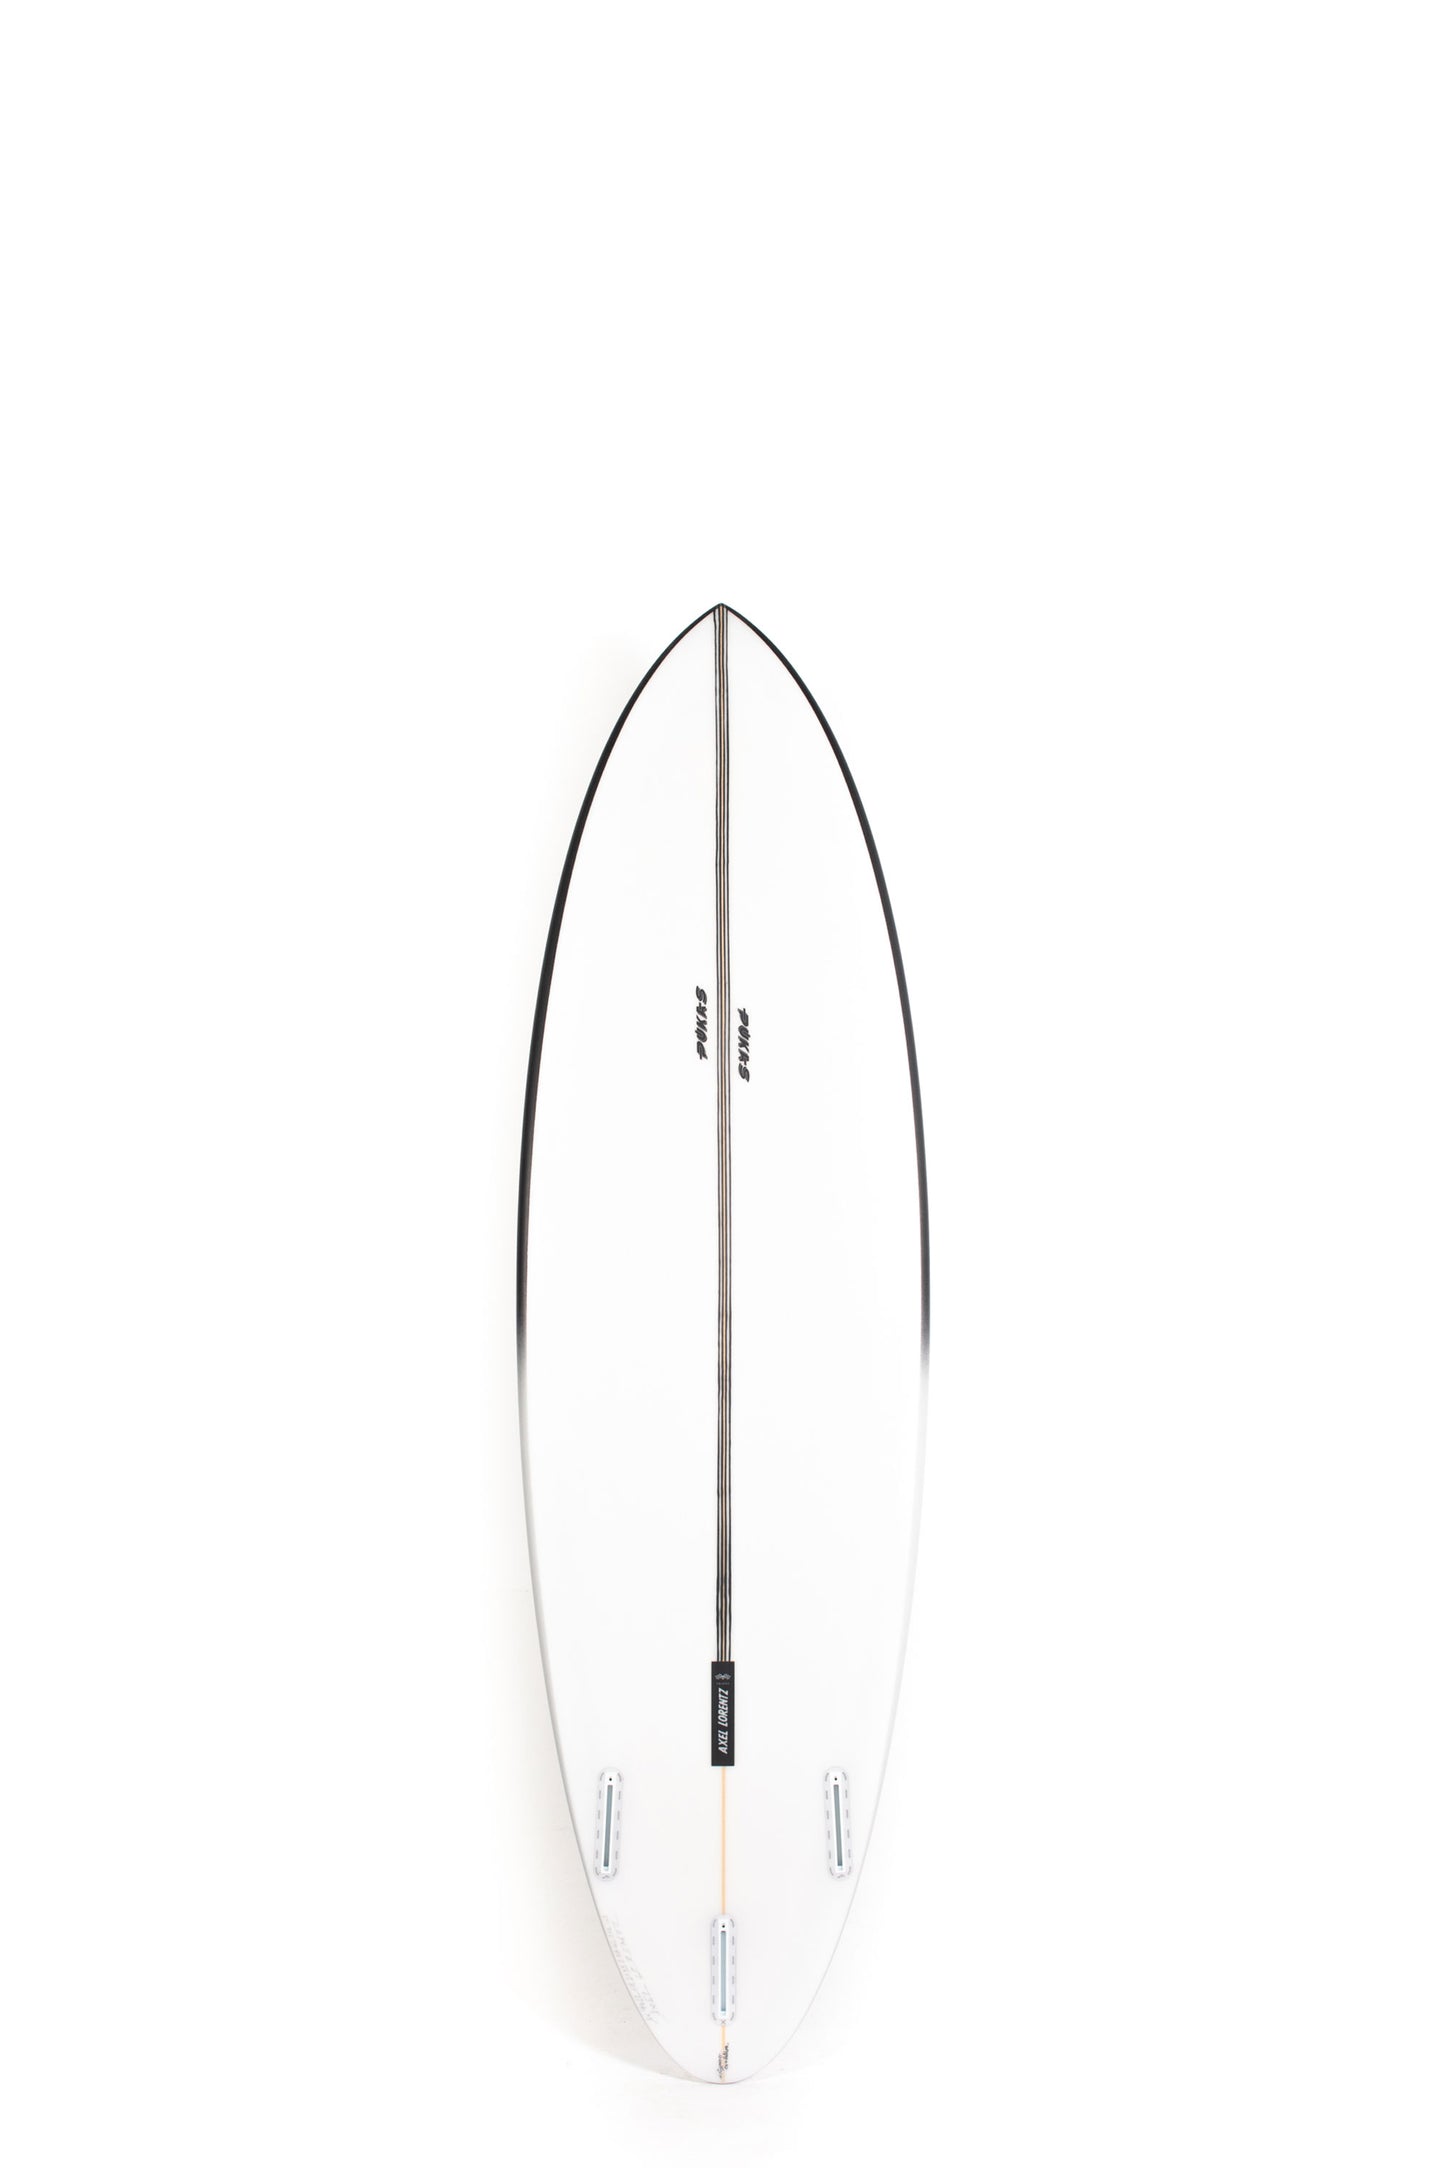 Pukas Surf Shop - Pukas Surfboard - 69ER EVOLUTION by Axel Lorentz- 6’6” x 21,25 x 2.88 - 42,2L - AX09422